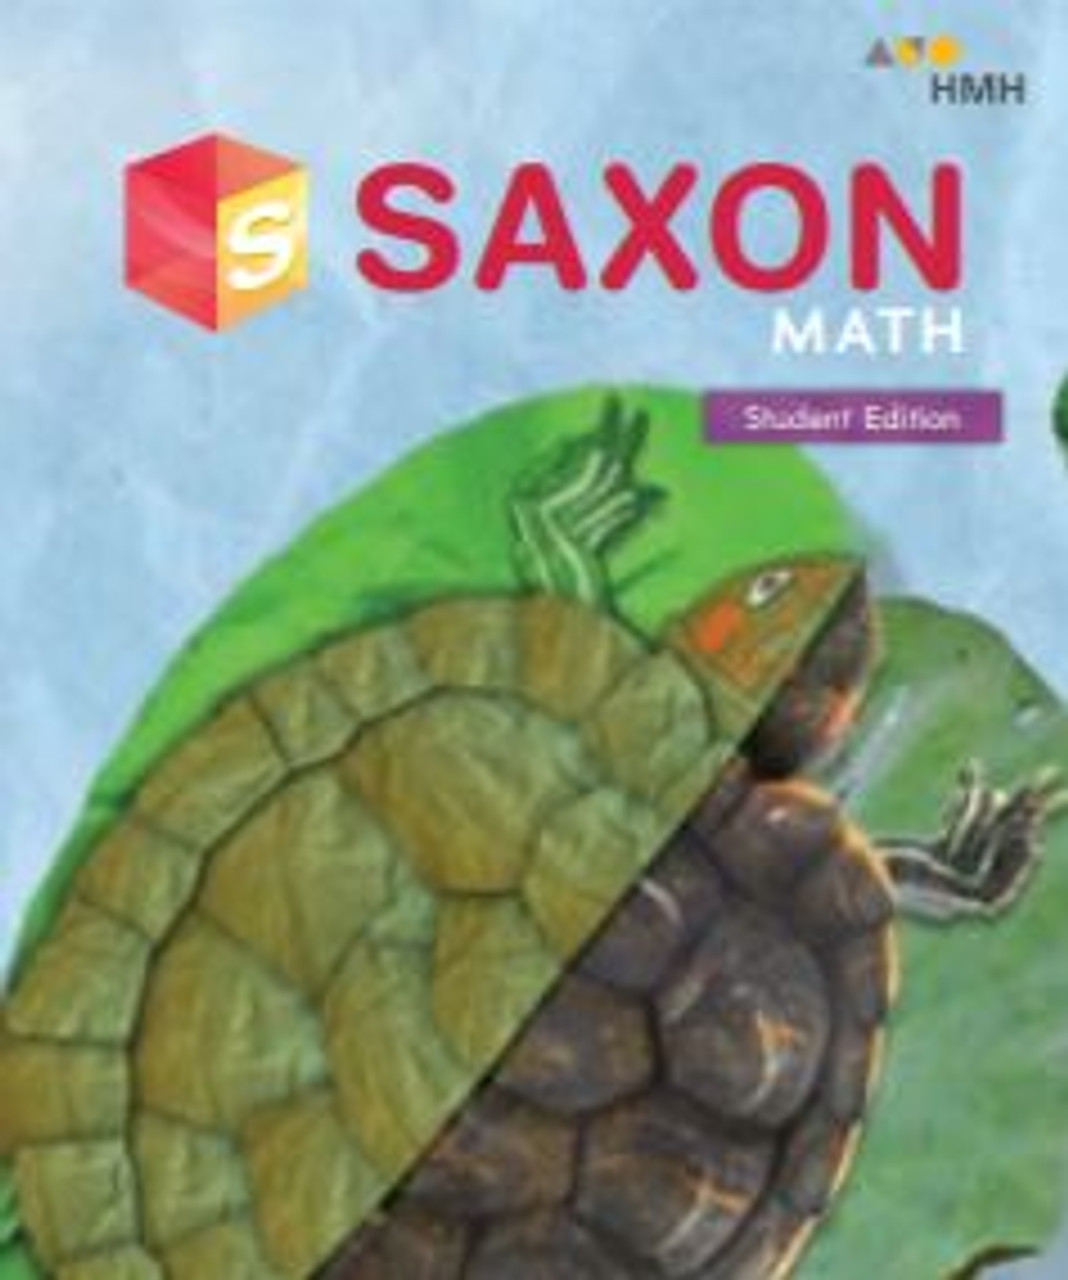 Center　Classroom　2018　Grade　Saxon　Textbook　Resource　Math　Student